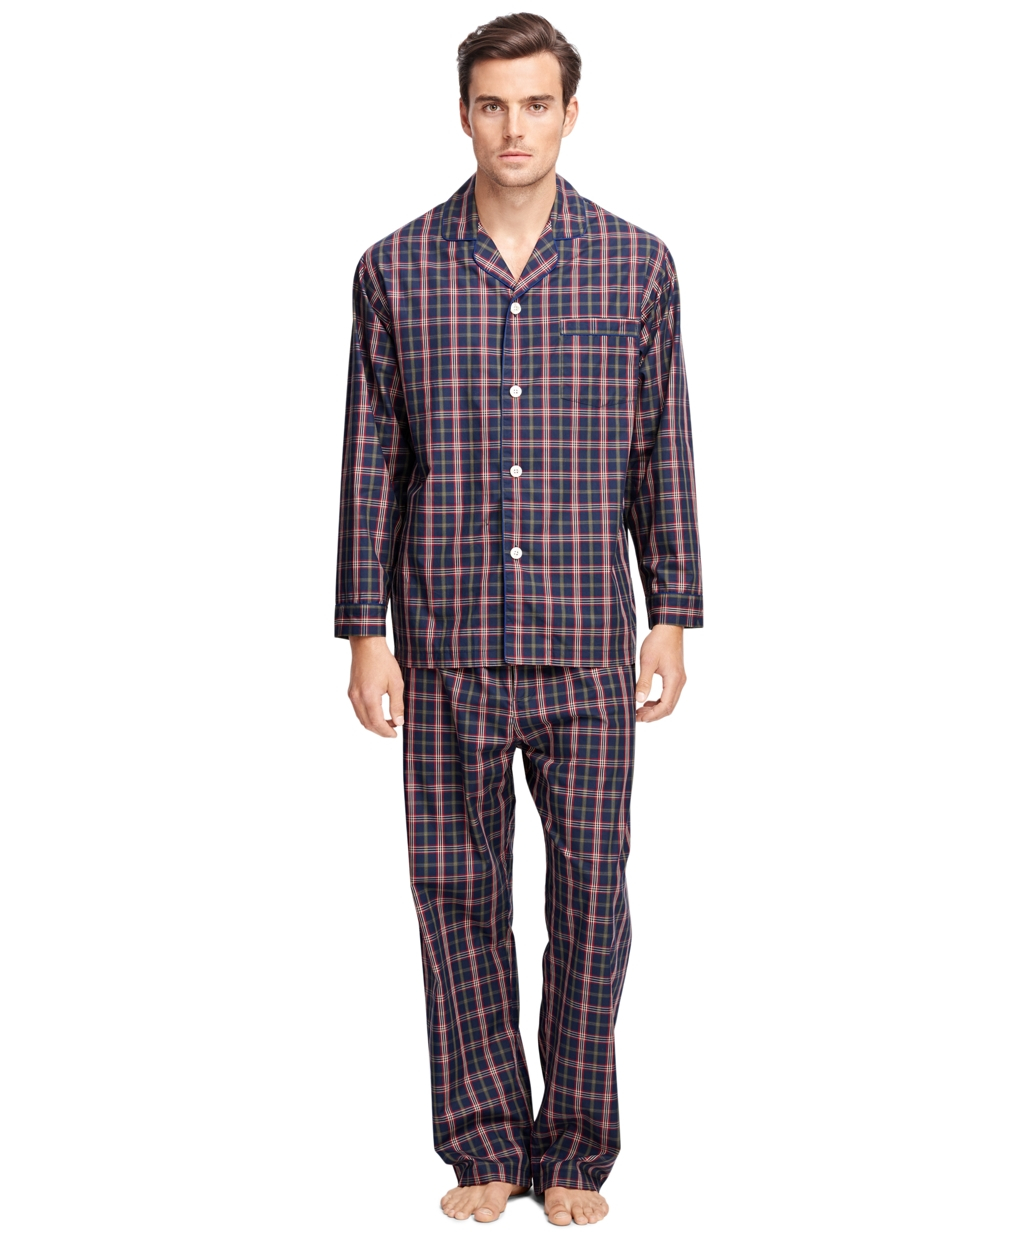 Lyst - Brooks brothers Signature Tartan Pajamas in Blue for Men